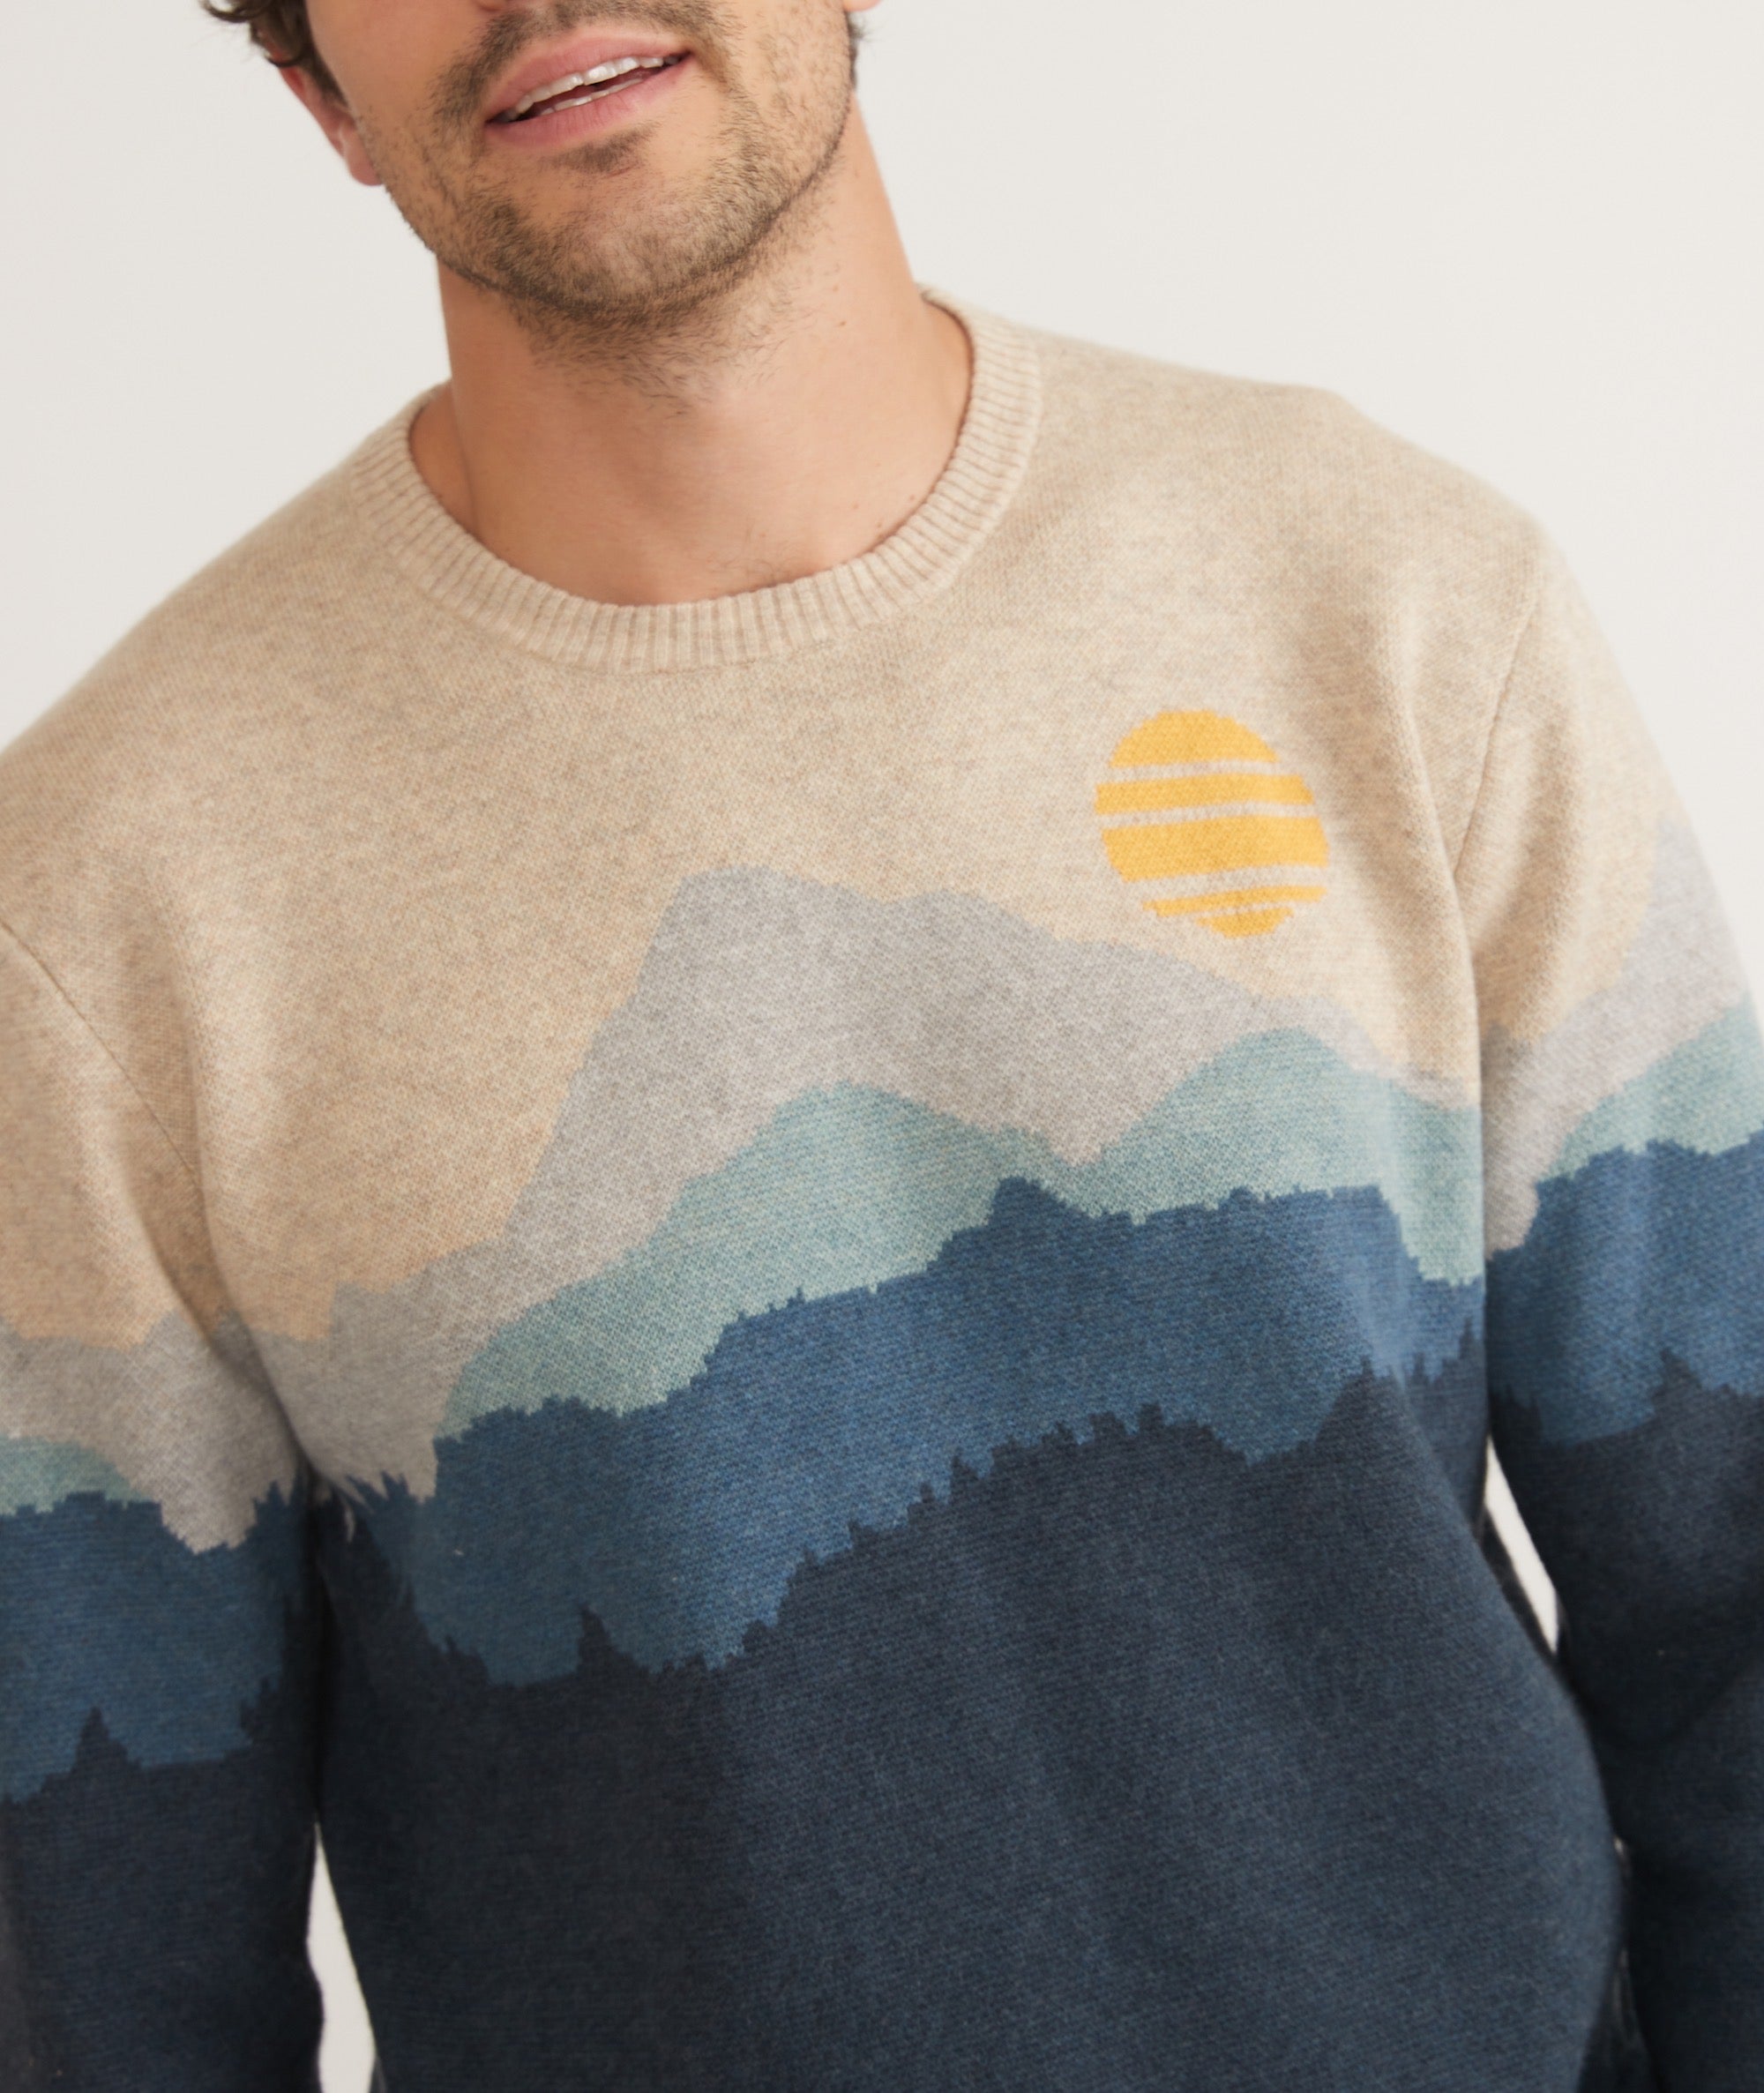 Calama Archive Marine – Sweater Layer